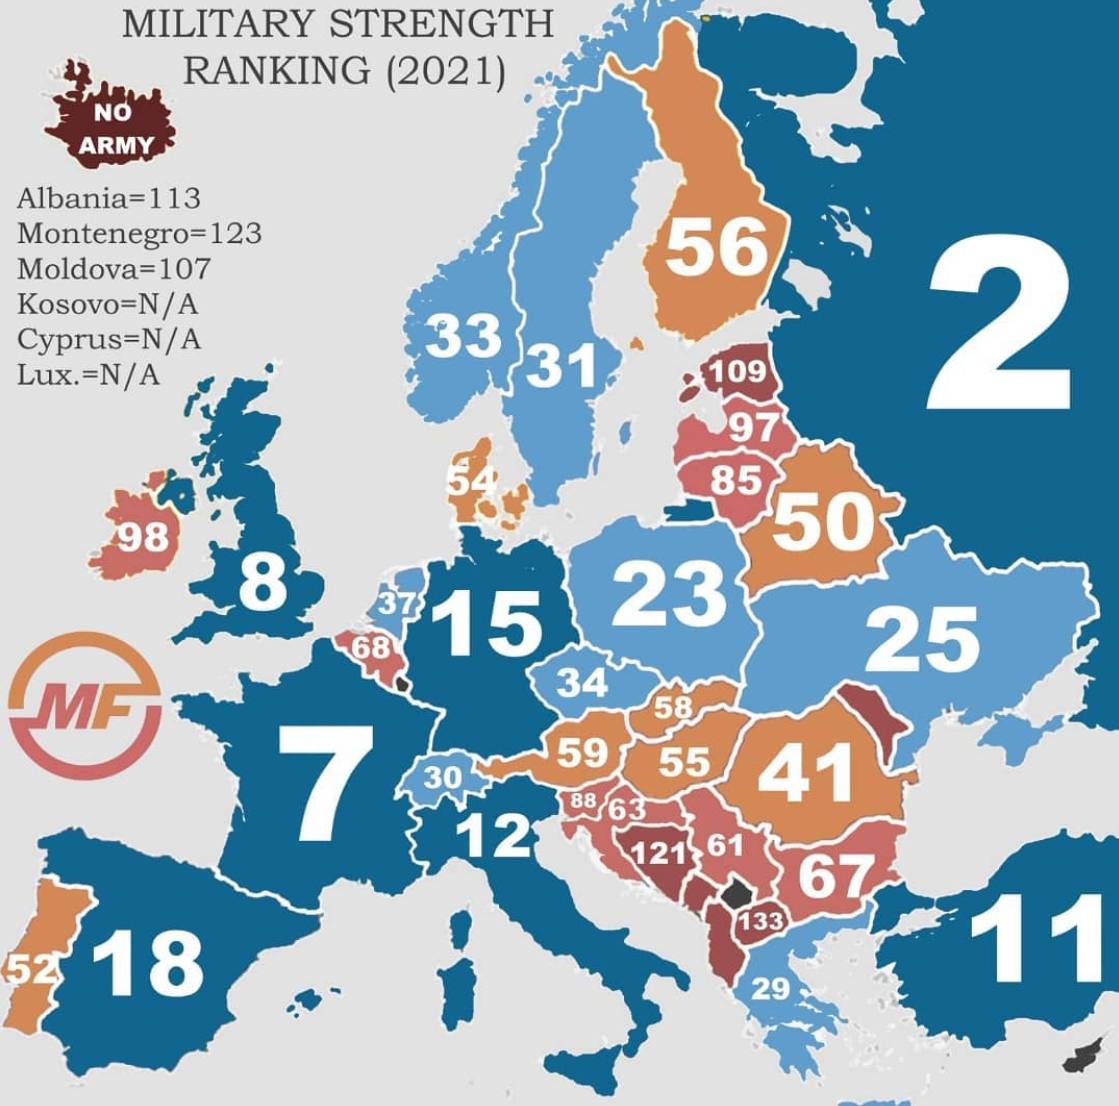 Ranking siły militarnej w Europie, 2021